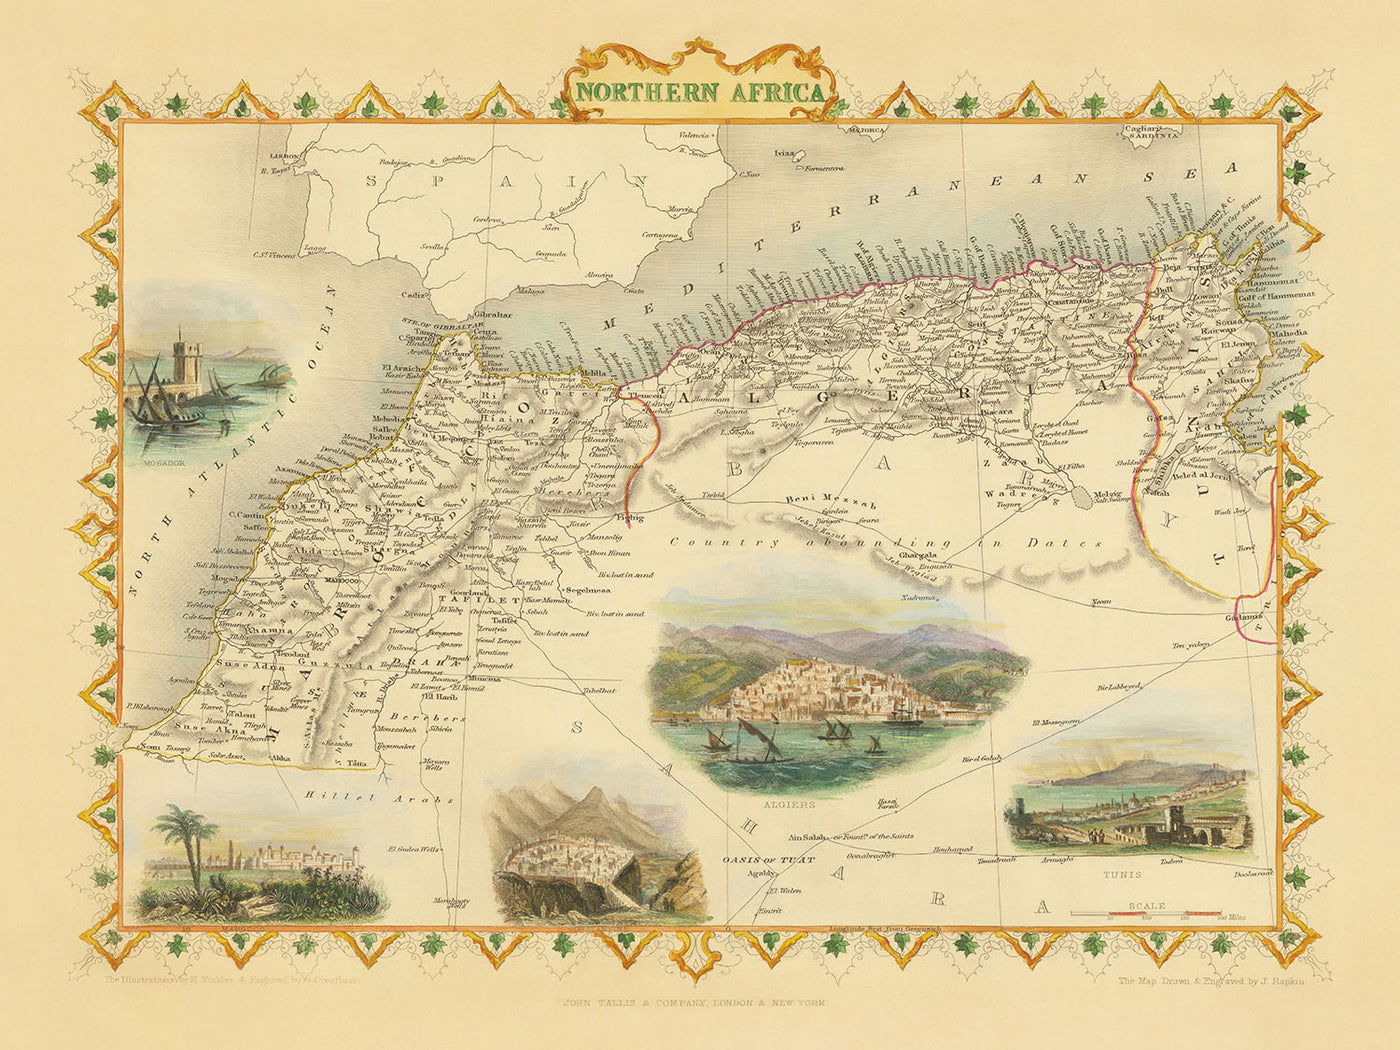 Old Map of Northern Africa by Tallis & Rapkin, 1851: Tunis, Algiers, Constantine, Atlas Mountains, Sahara